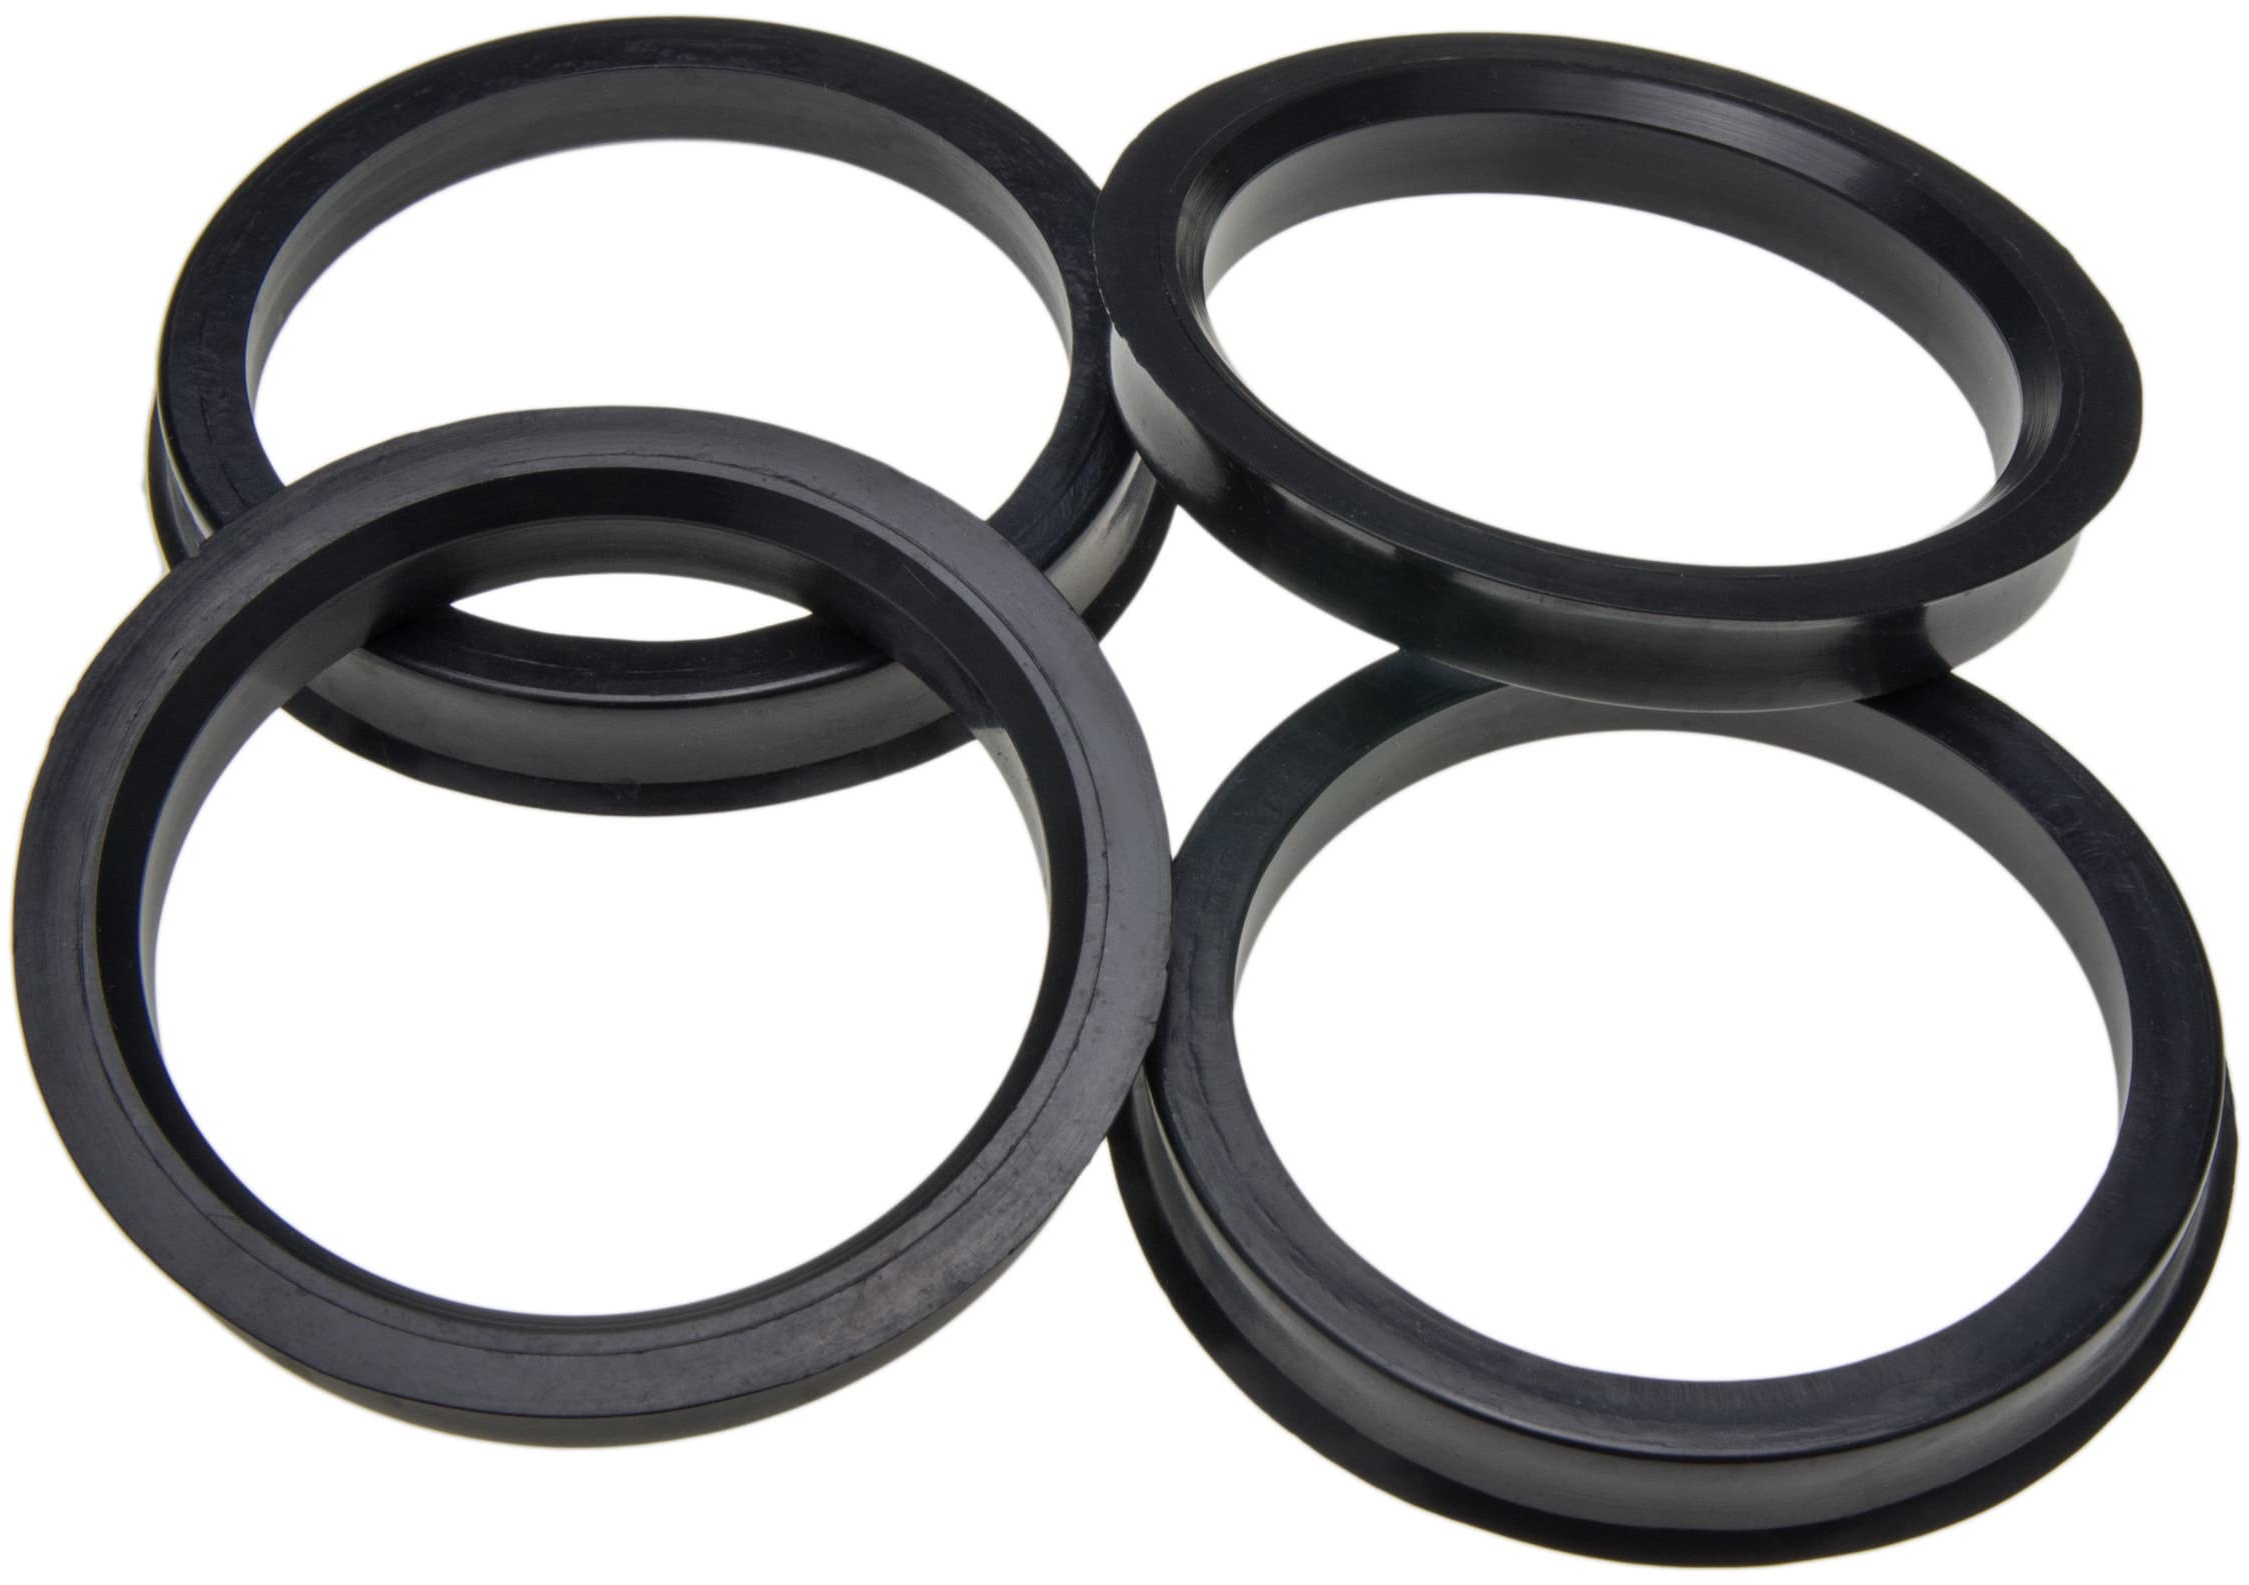 4x Set Felgen Zentrierringe 68,1 mm auf 54,1 mm Alufelgen TOP Qualität Hub Rings 